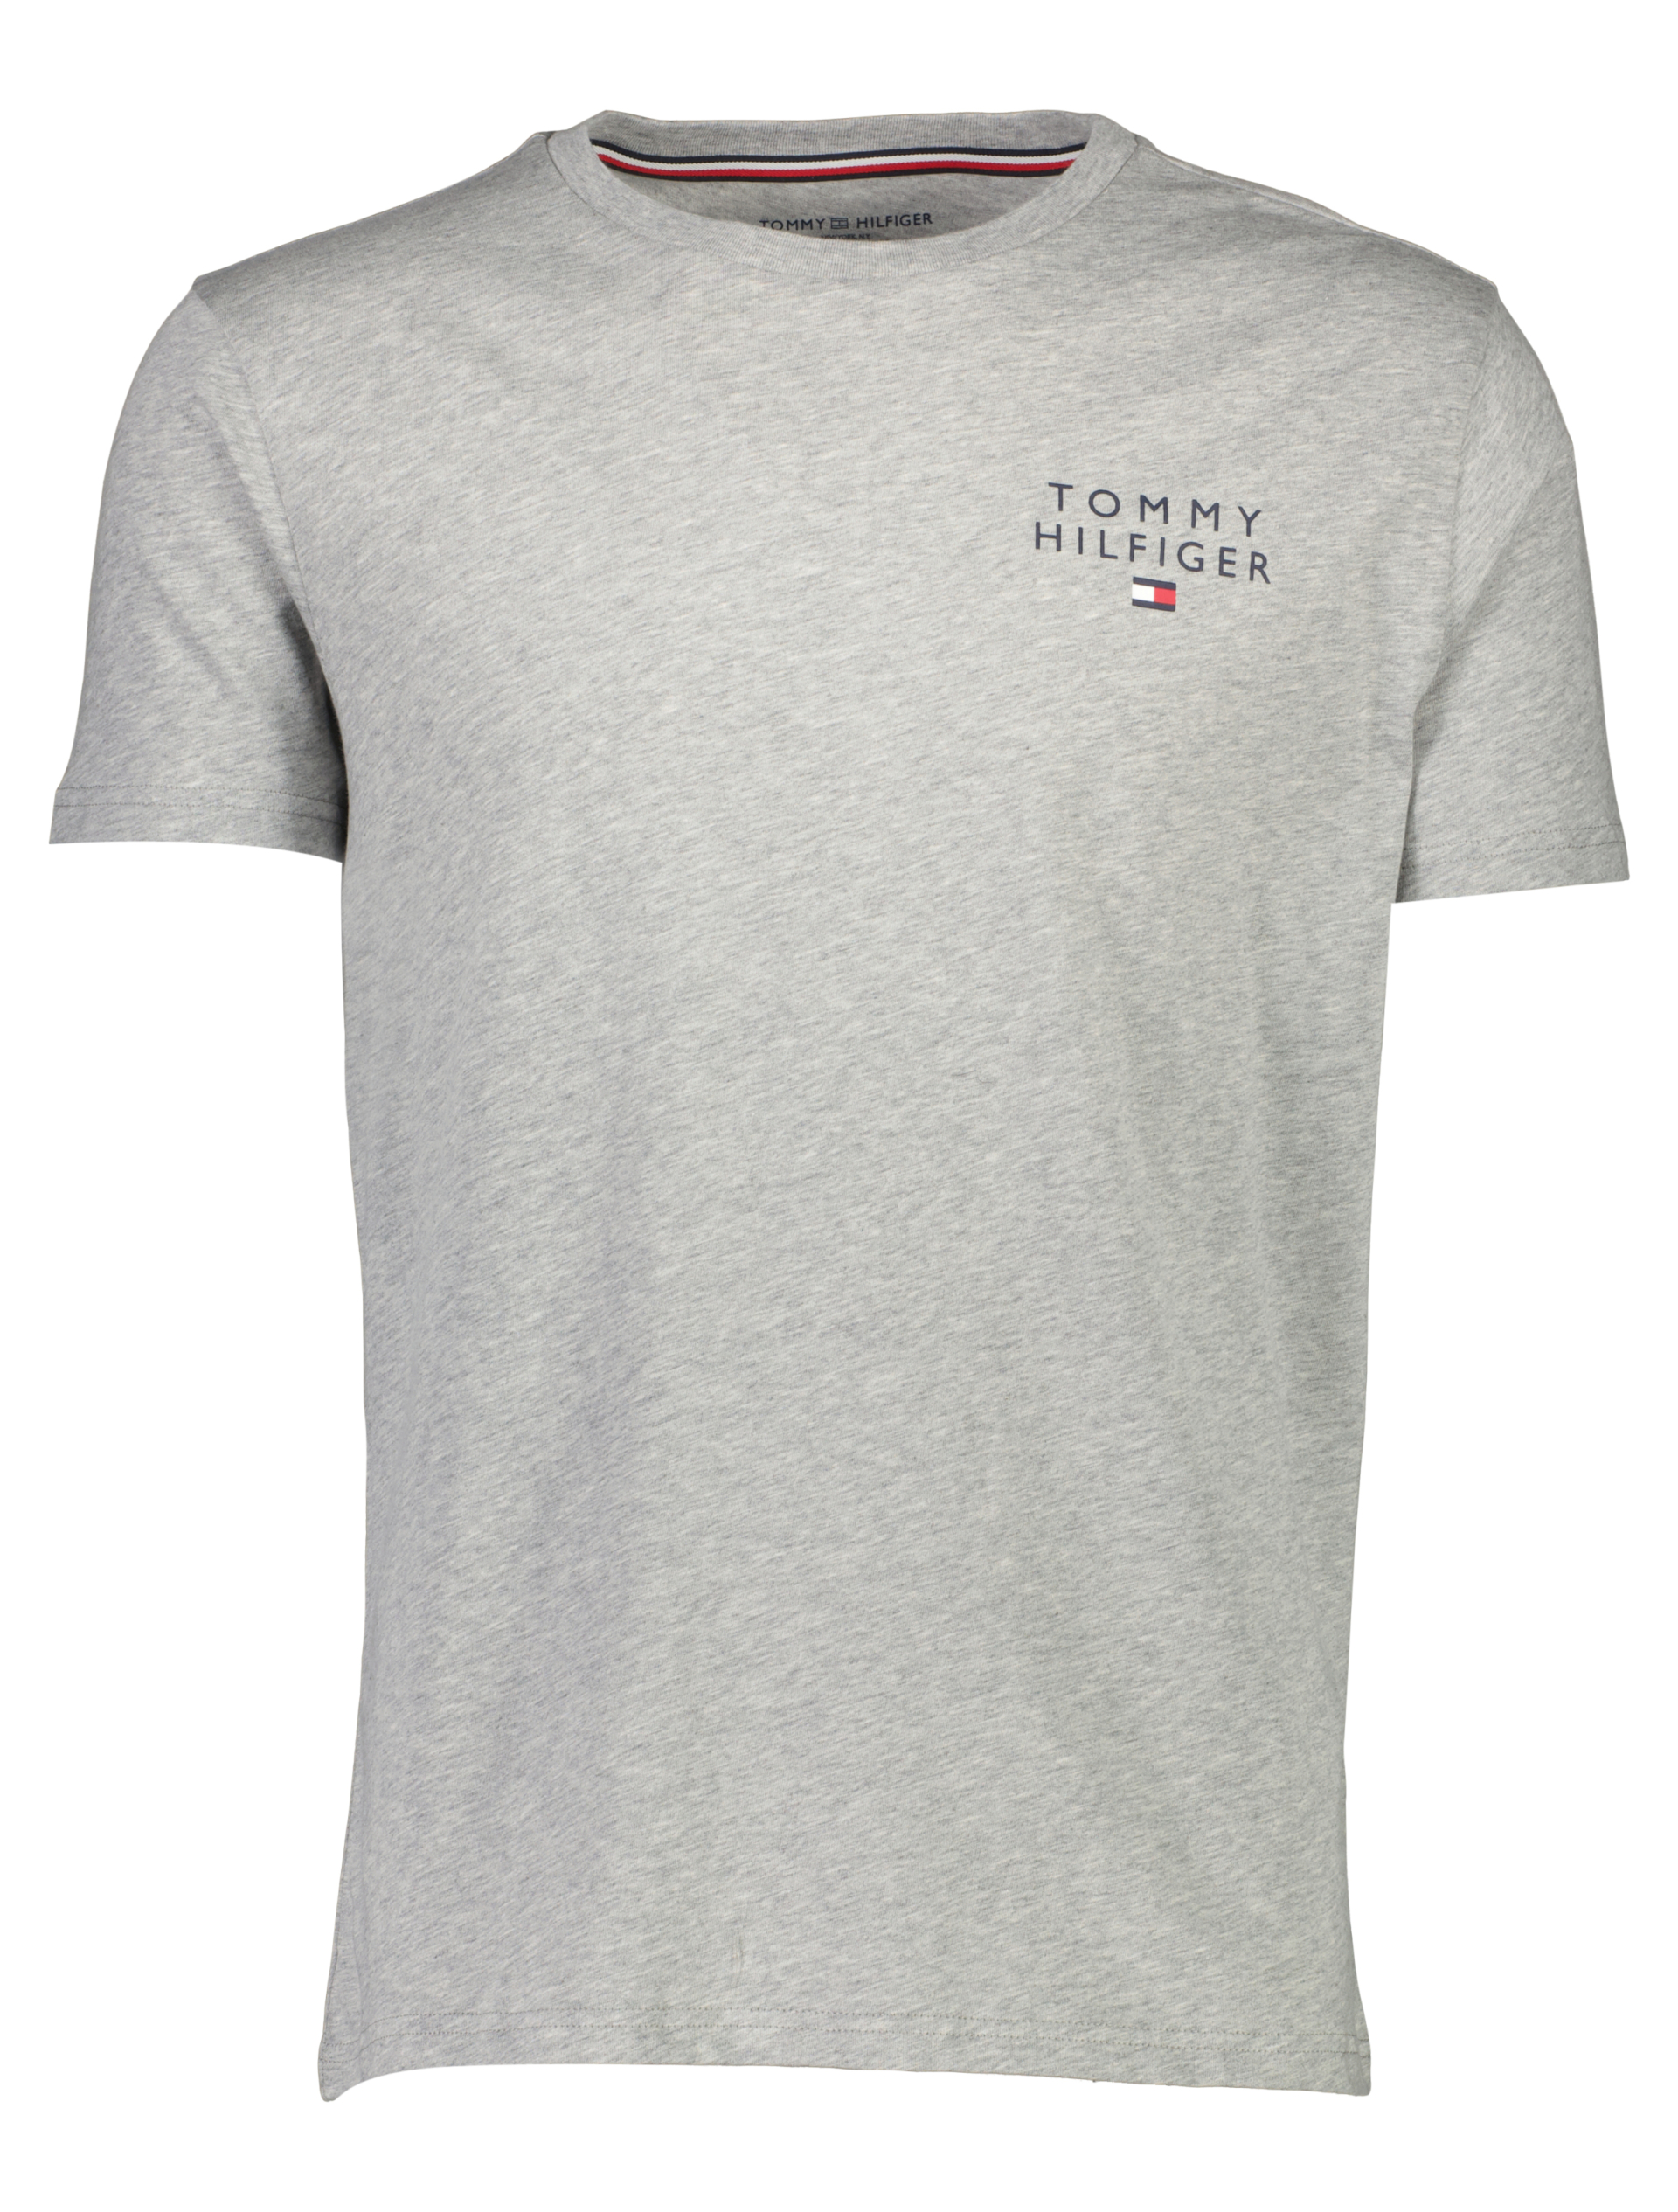 Tommy Hilfiger T-shirt grå / p61 grey